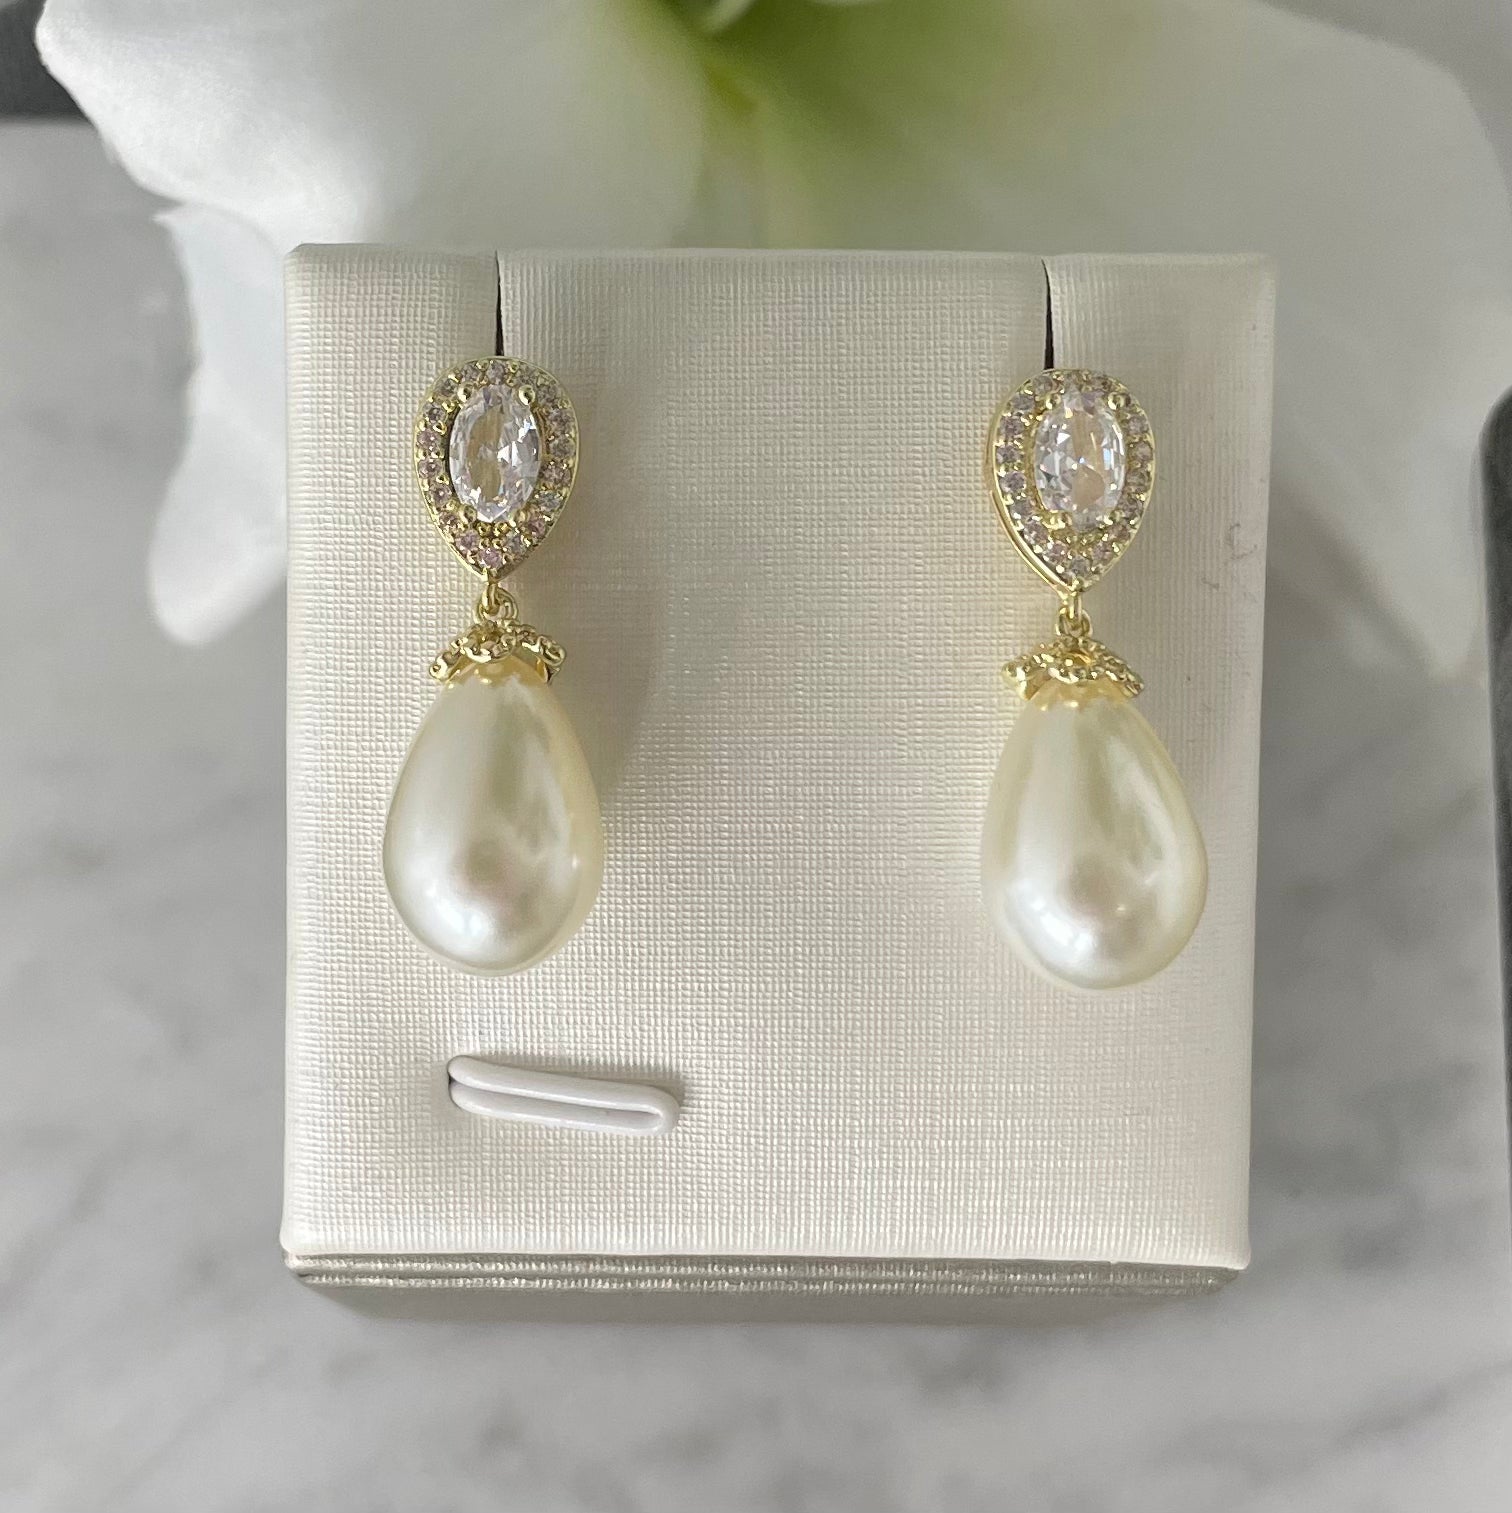 Eloise Bridal Dangle Earrings with Zircon Studs and Teardrop Pearls - Divine Bridal